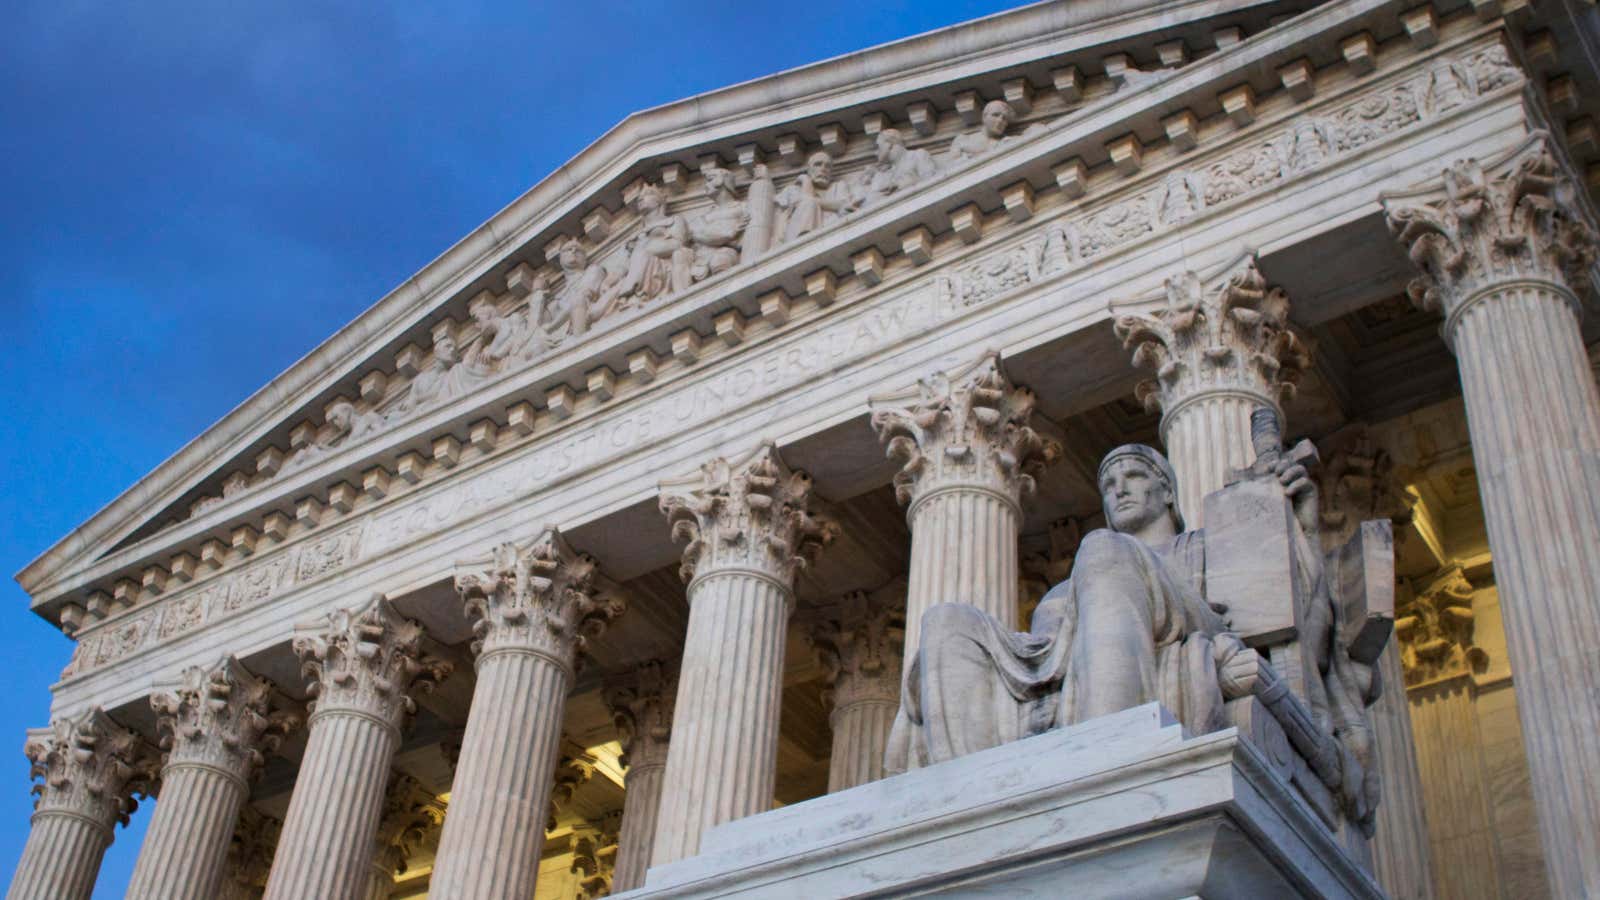 The United States Supreme Court in Washington, DC.